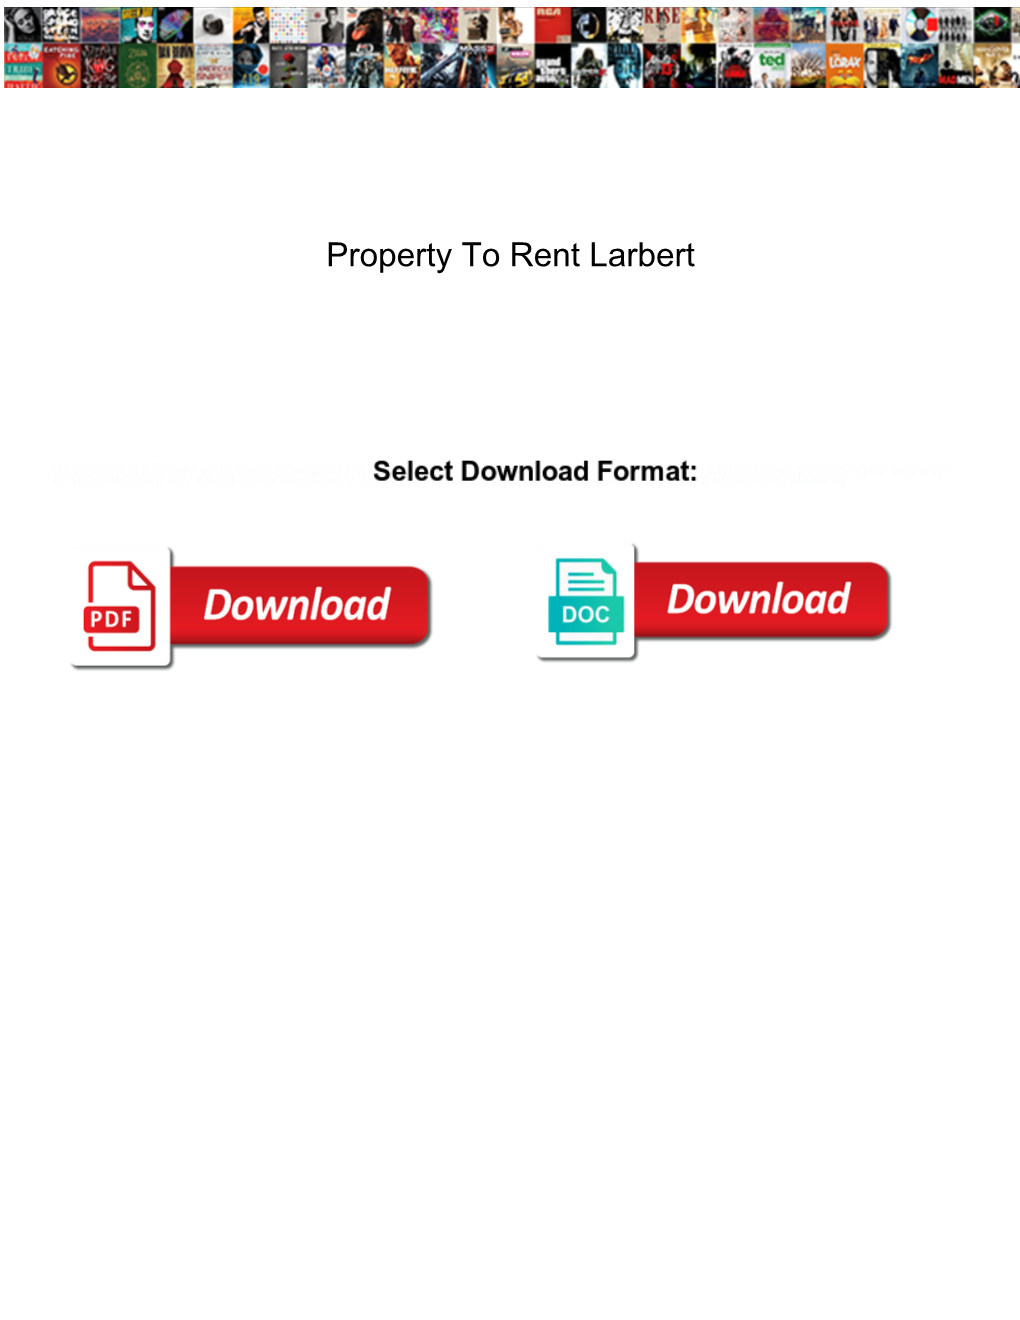 Property to Rent Larbert